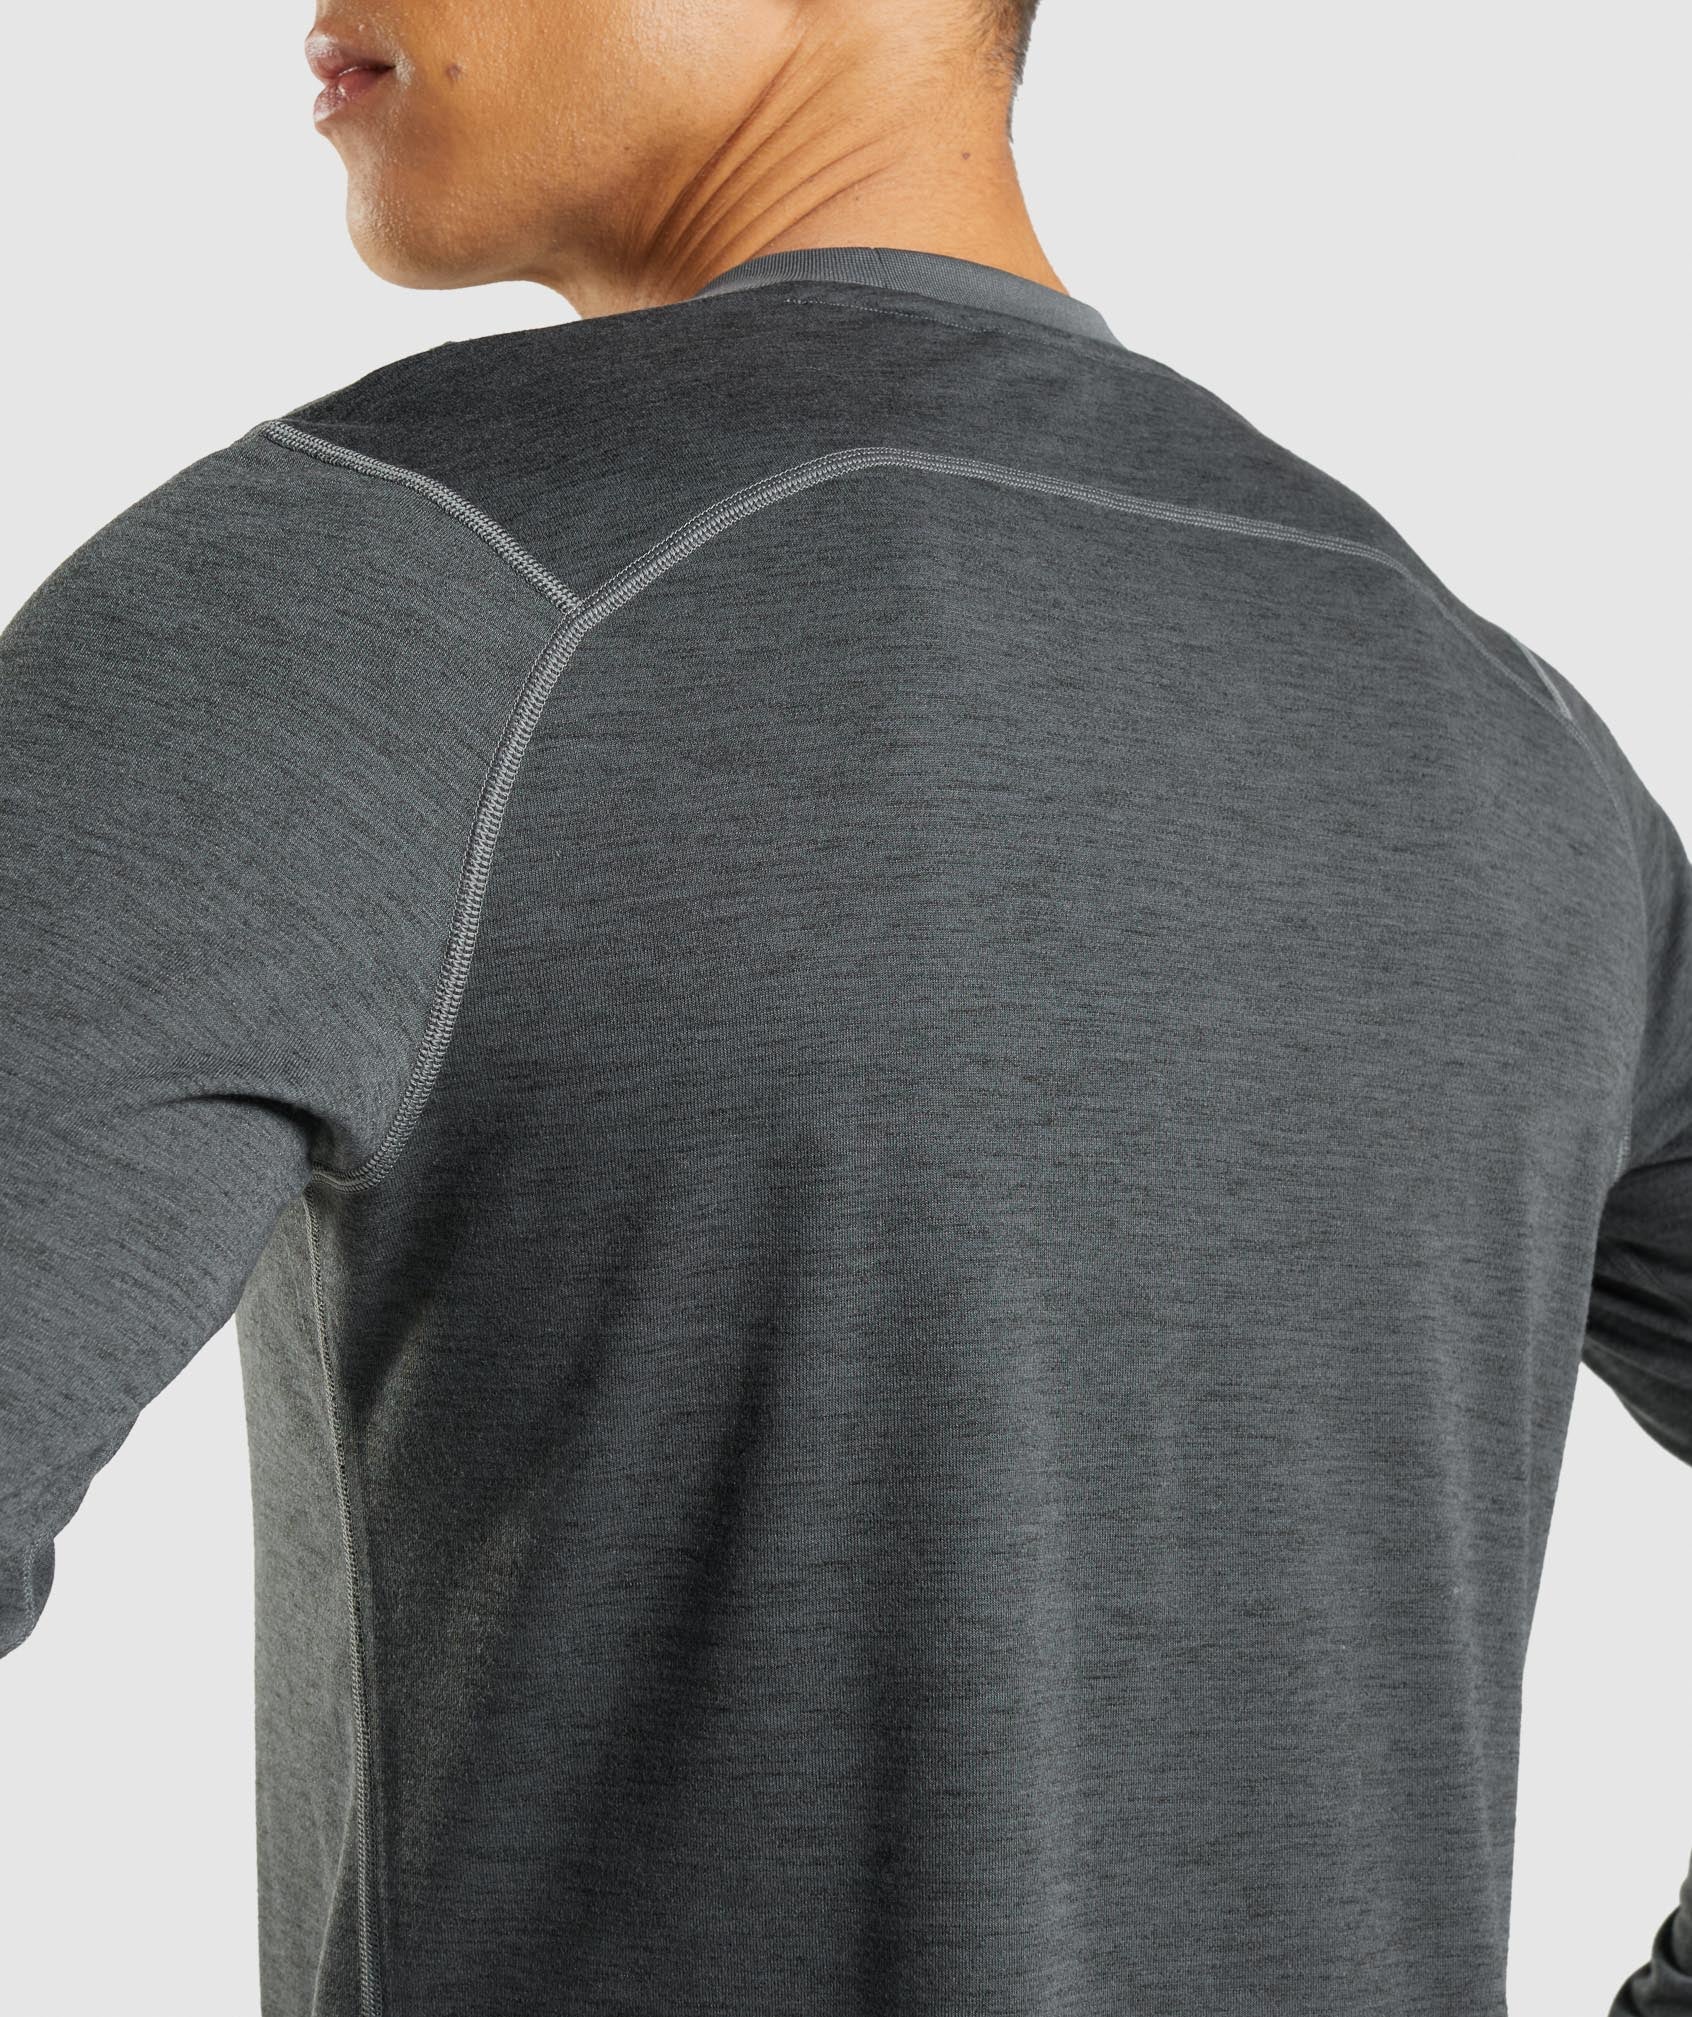 Retake Long Sleeve T-Shirt in Charcoal Marl